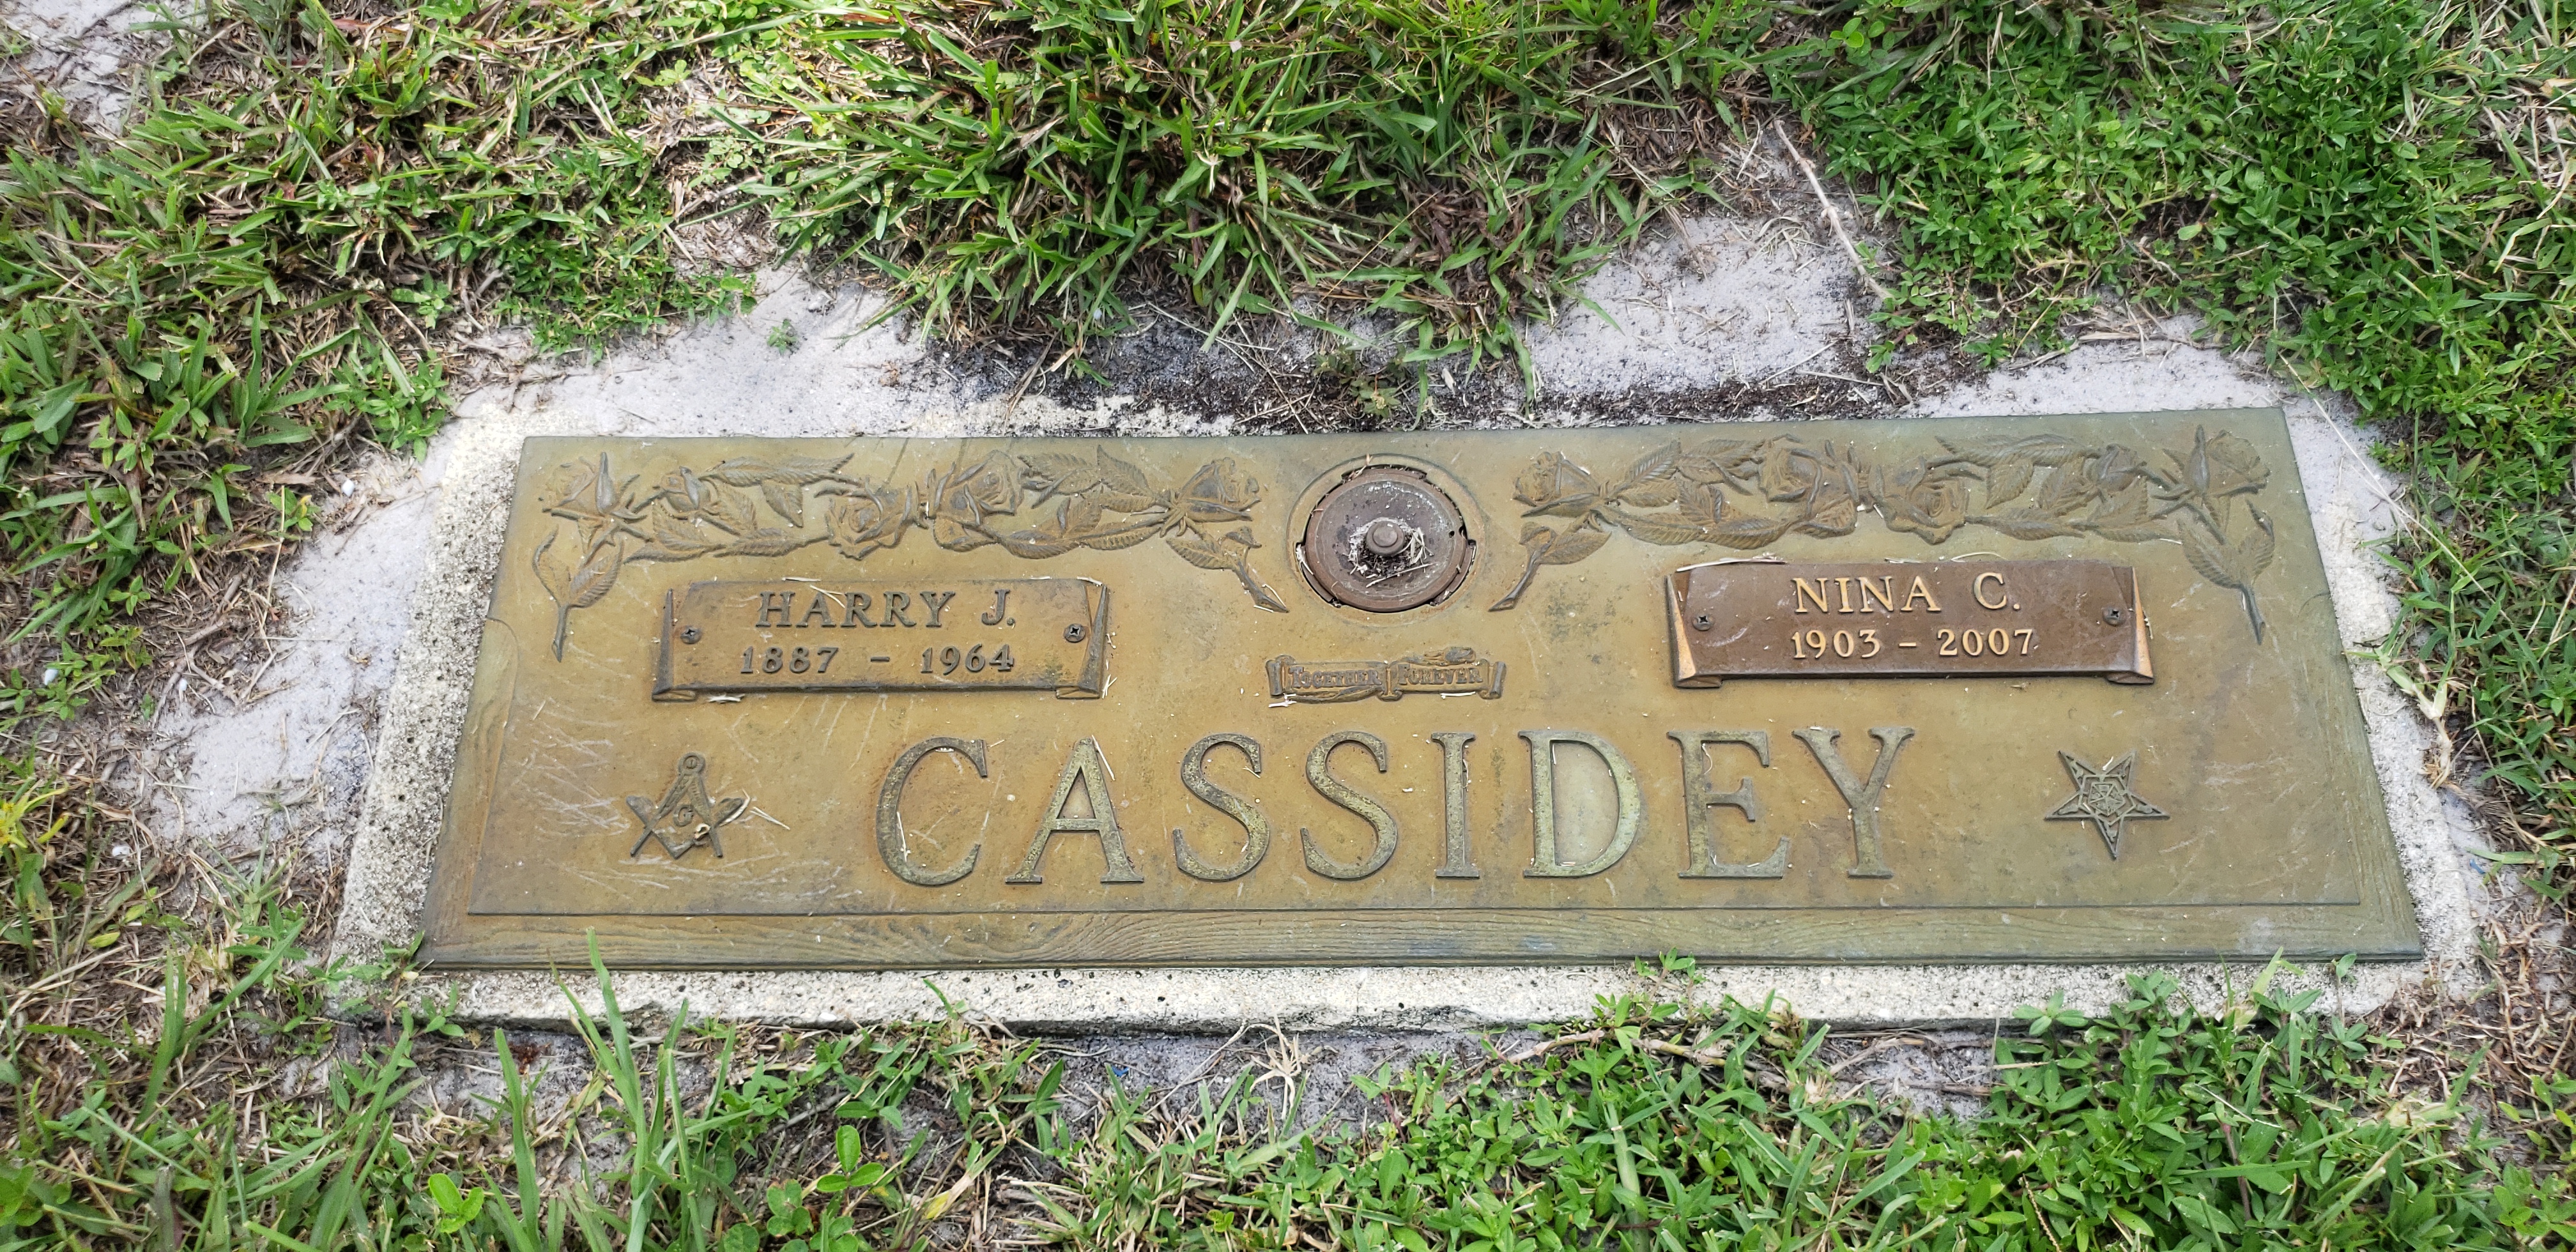 Harry J Cassidey